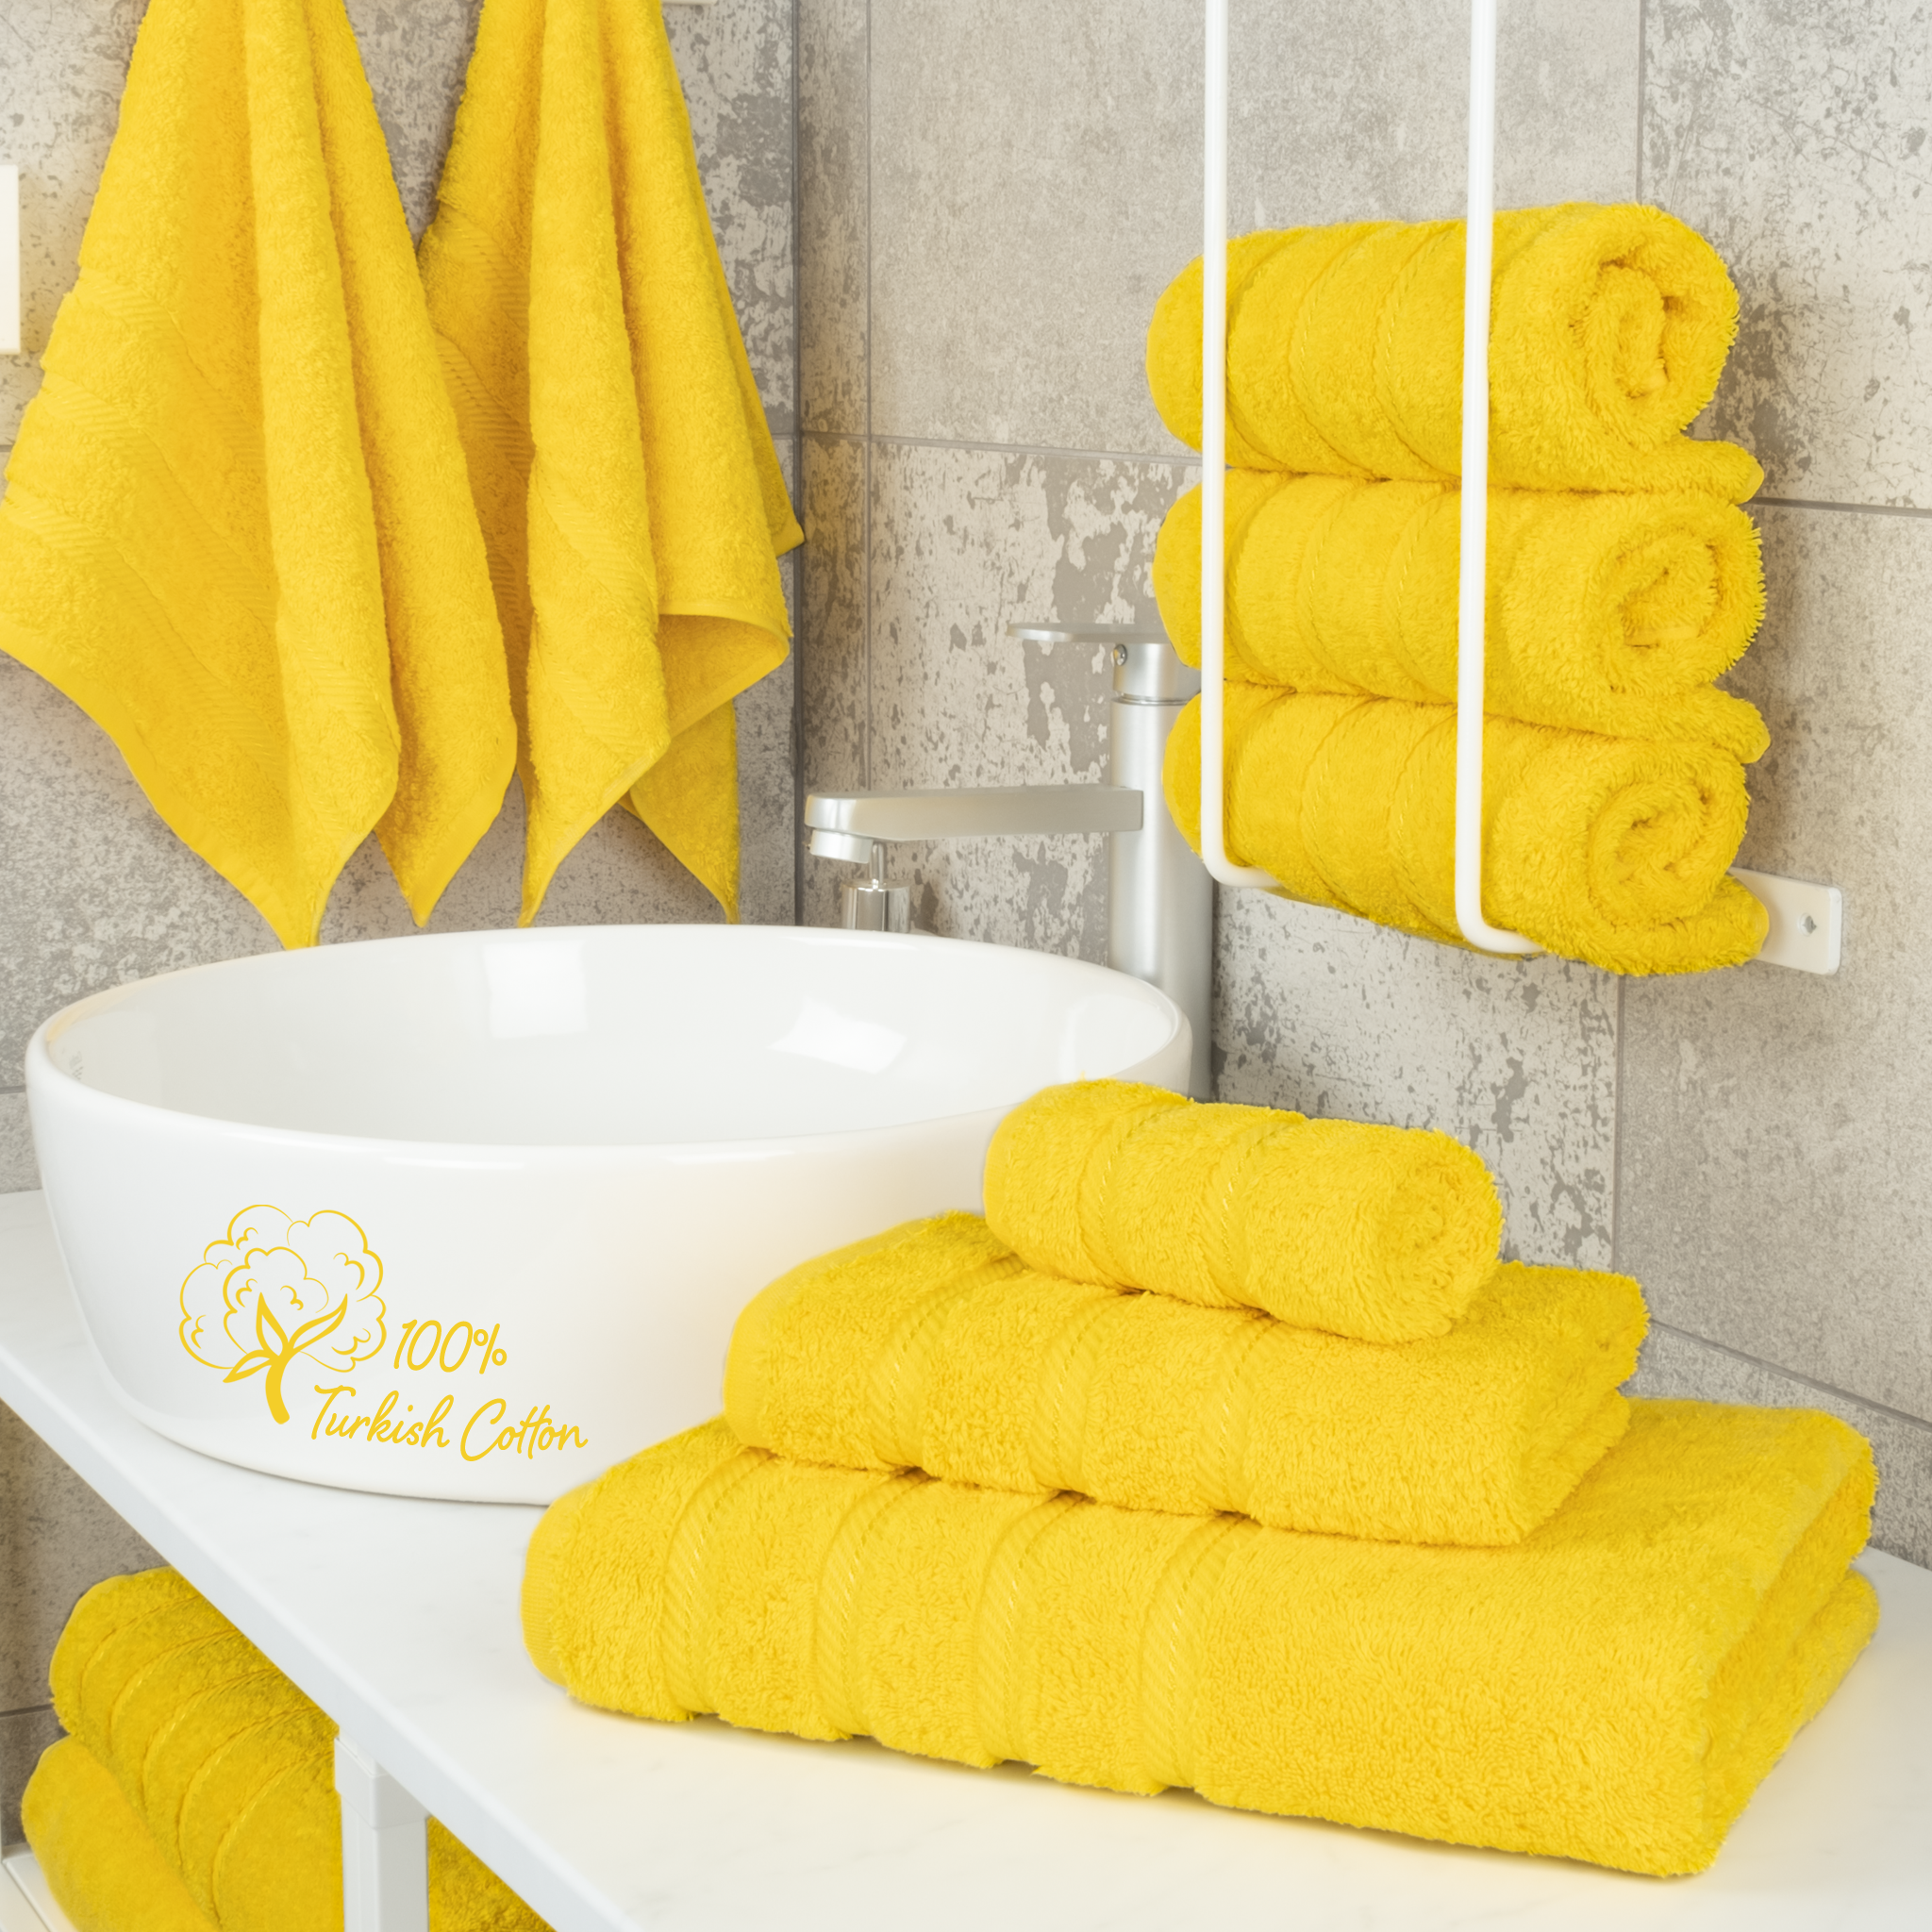 American Soft Linen - 3 Piece Turkish Cotton Towel Set - Yellow - 2